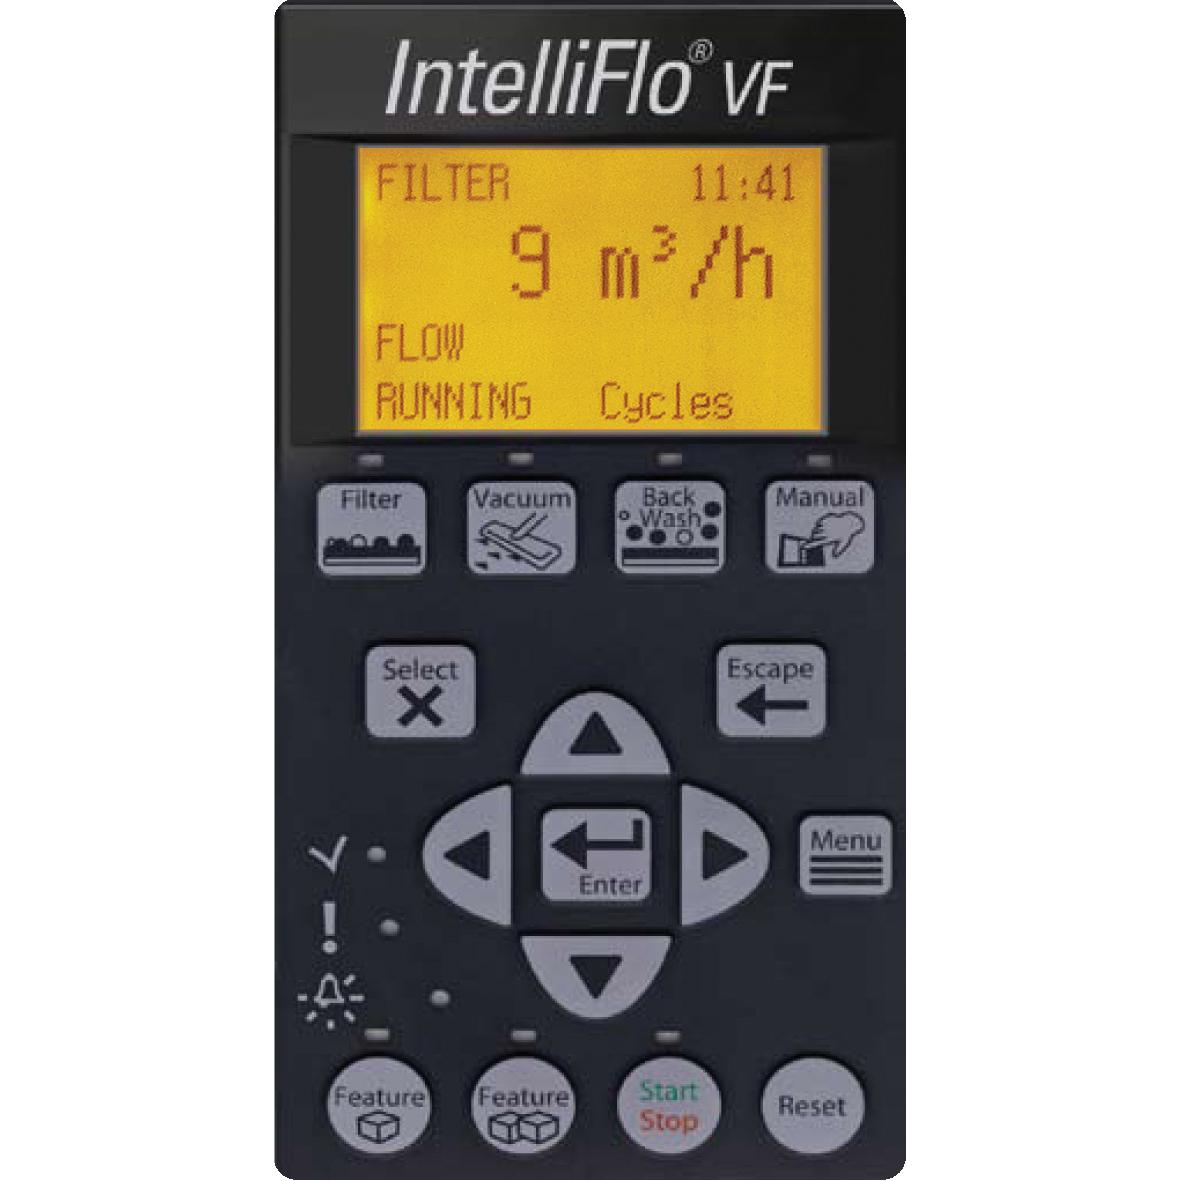 Intelliflow remote control